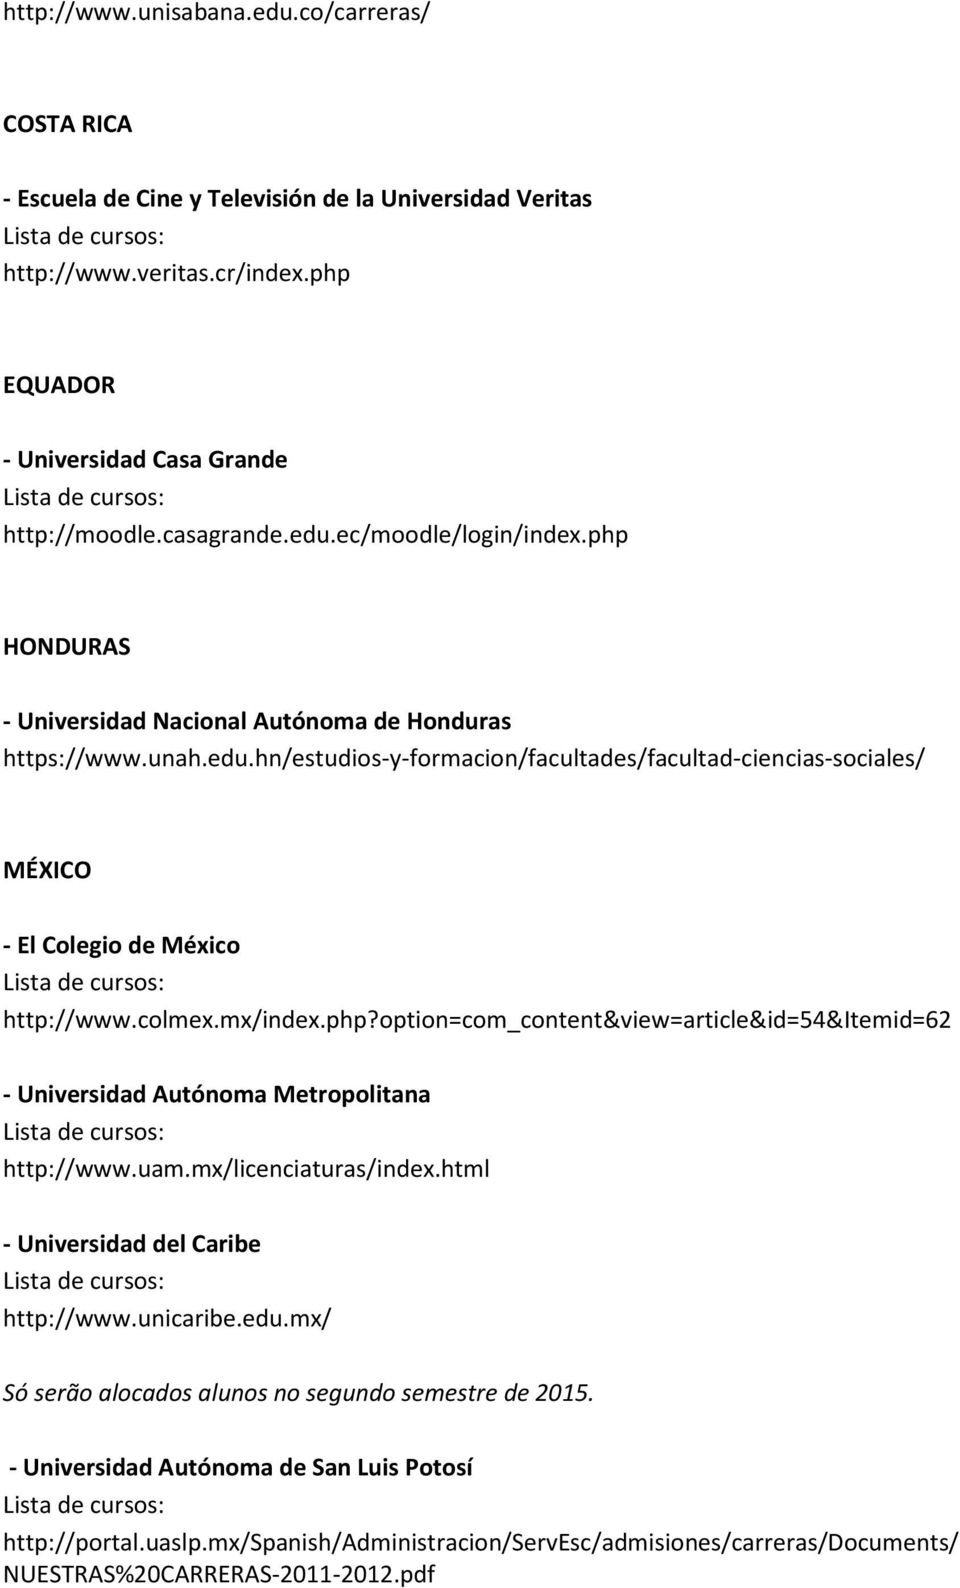 colmex.mx/index.php?option=com_content&view=article&id=54&itemid=62 - Universidad Autónoma Metropolitana http://www.uam.mx/licenciaturas/index.html - Universidad del Caribe http://www.unicaribe.edu.